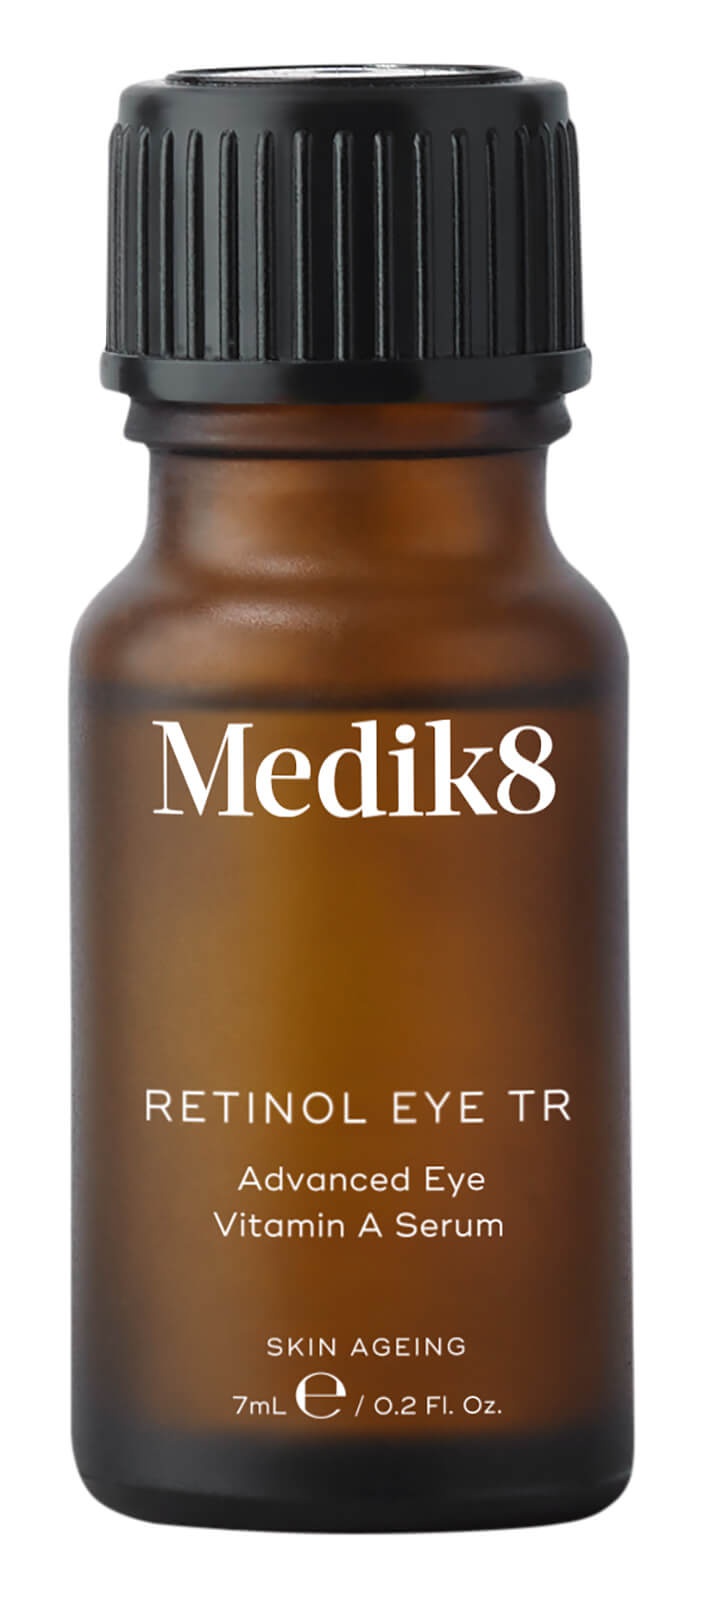 Medik8 Retinol Eye Tr Serum